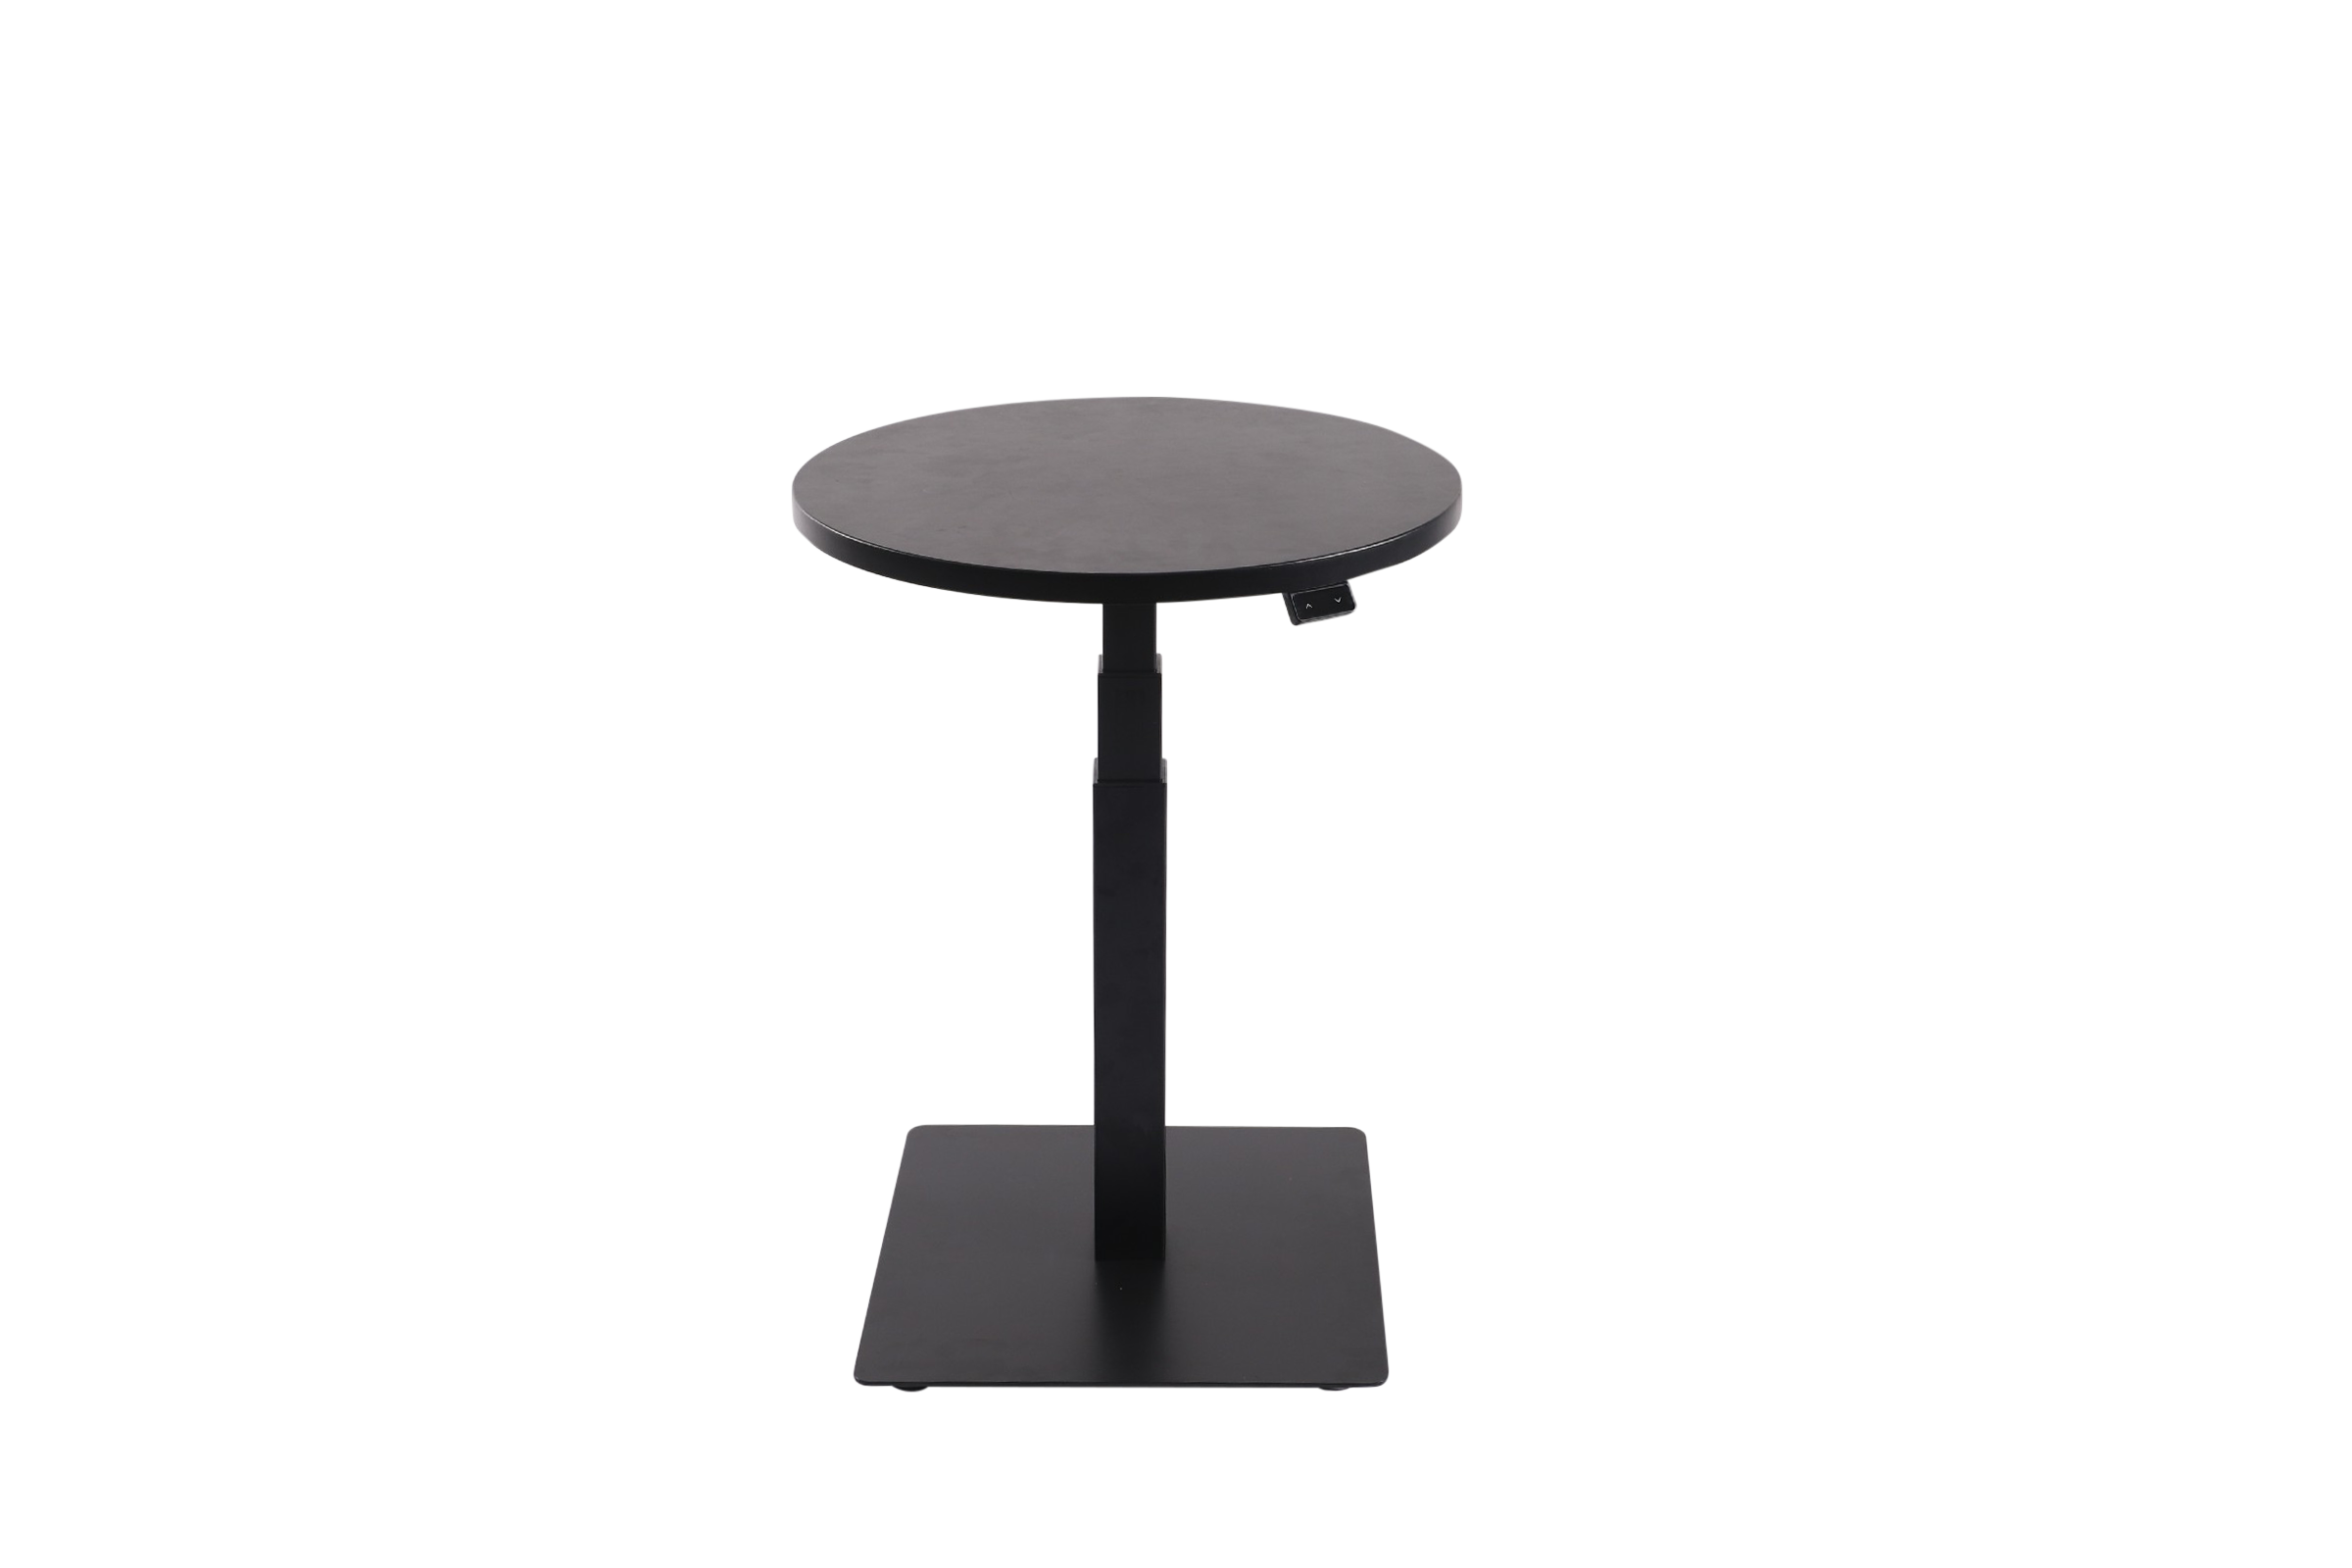 NT33-E3 Electric Height Adjustable Table Office Adjustable Desk Naite Ergonomic Laptop Desks